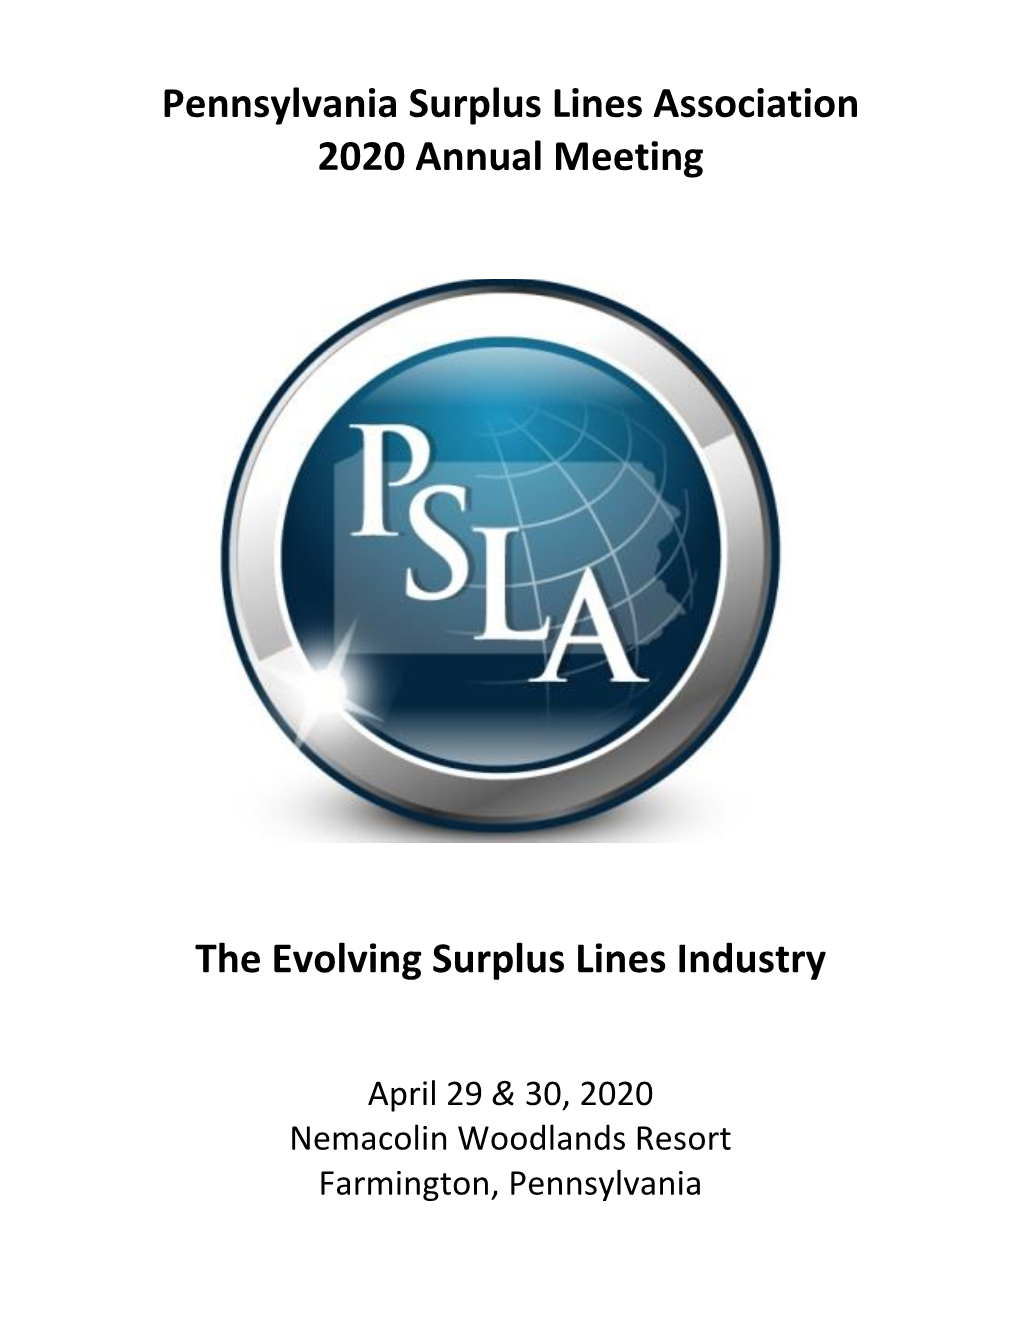 Pennsylvania Surplus Lines Association 2020 Annual Meeting